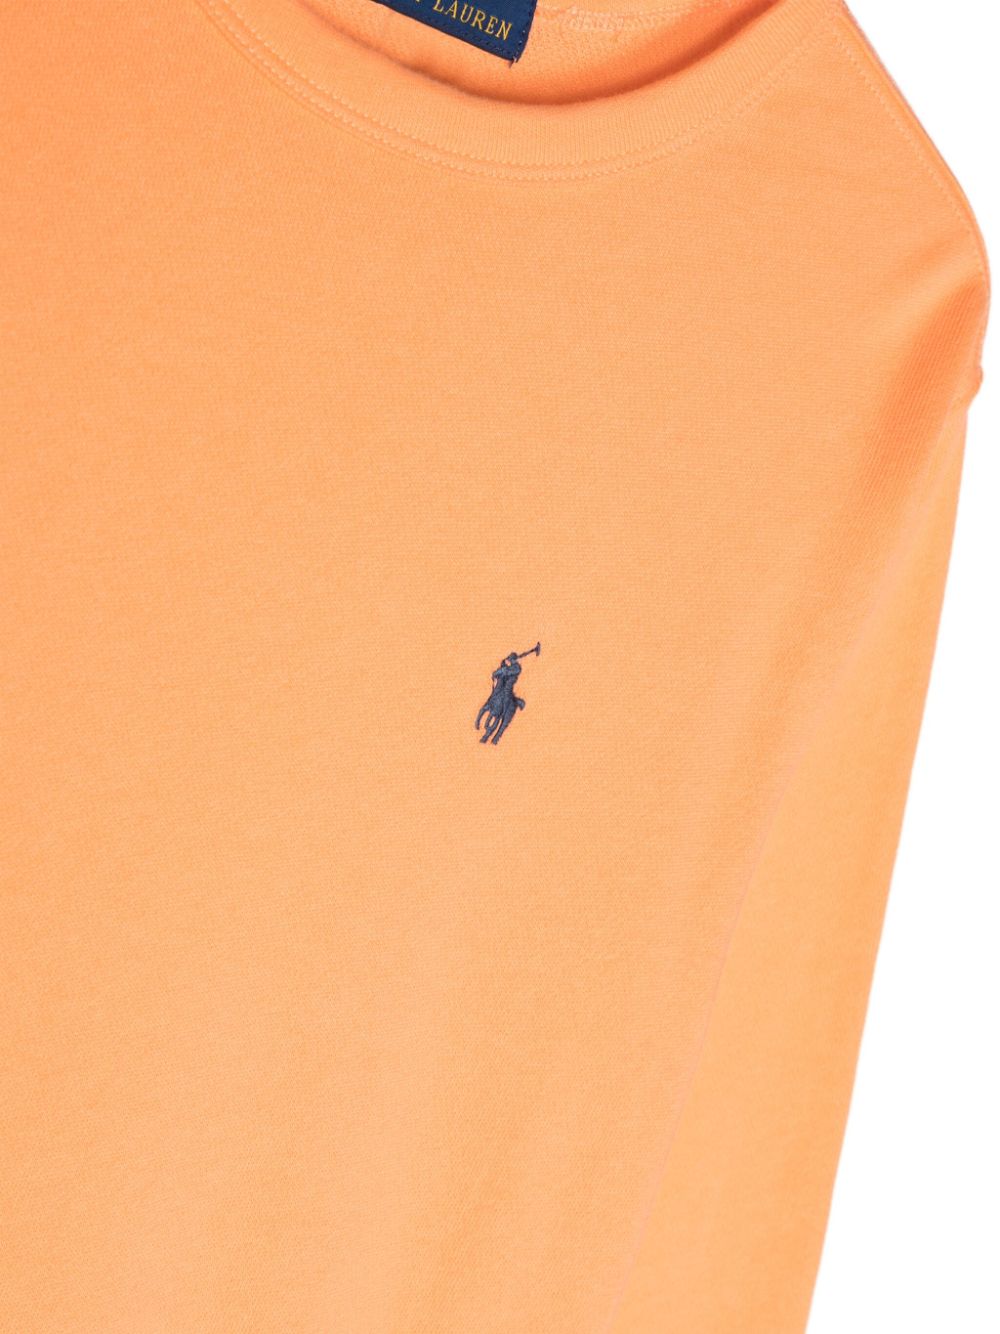 Orange sweatshirt for boys with logo